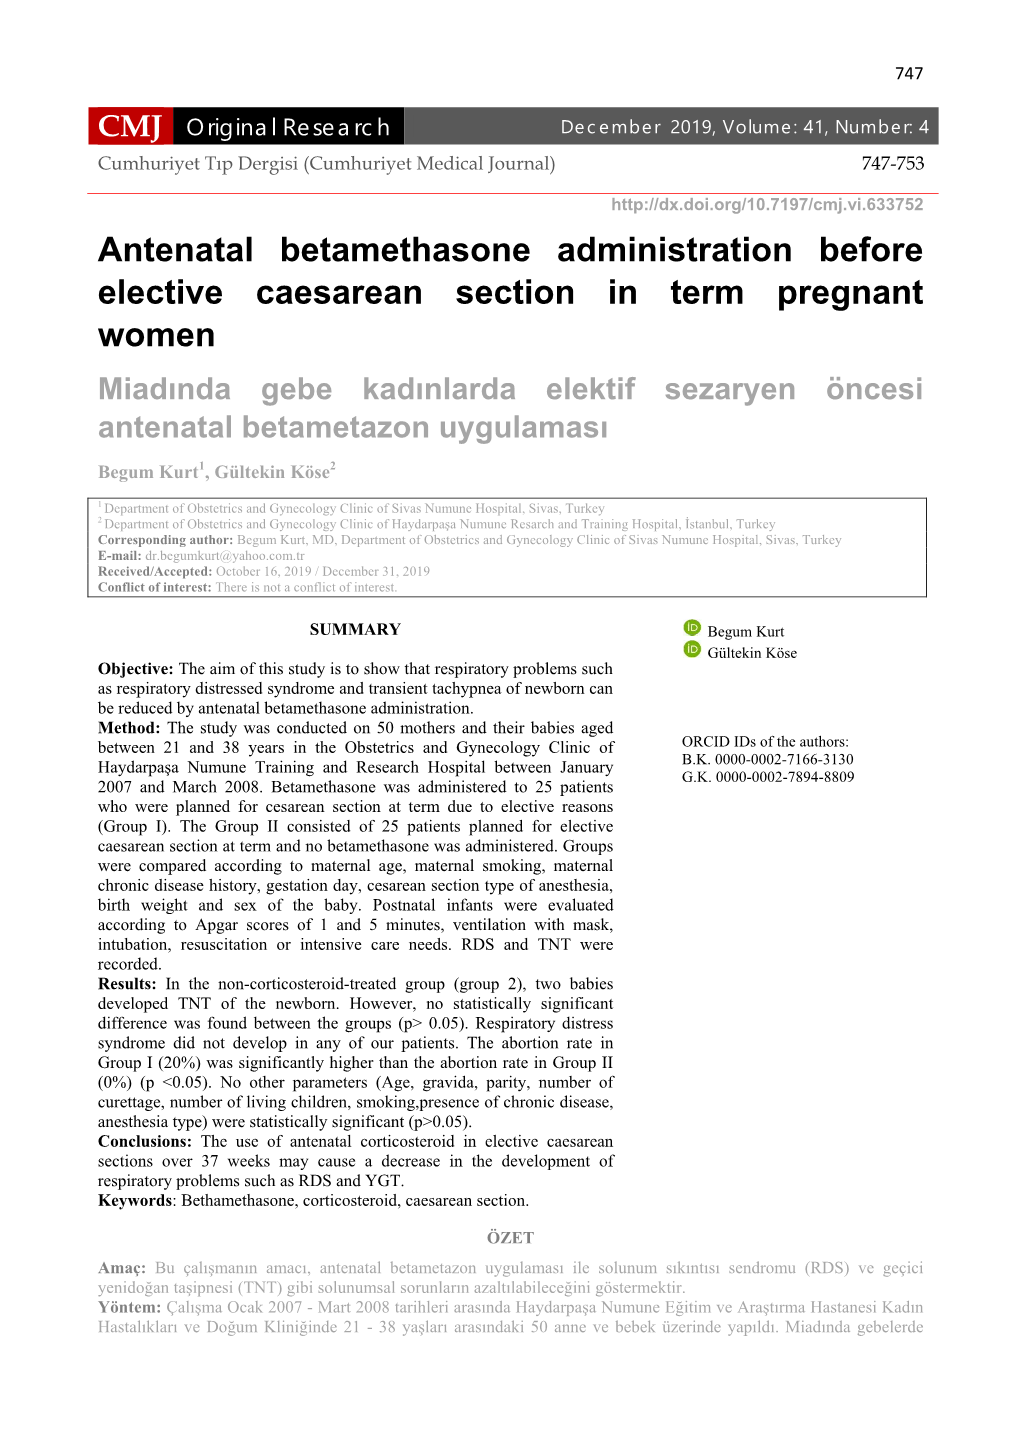 Antenatal Betamethasone Administration Before Elective